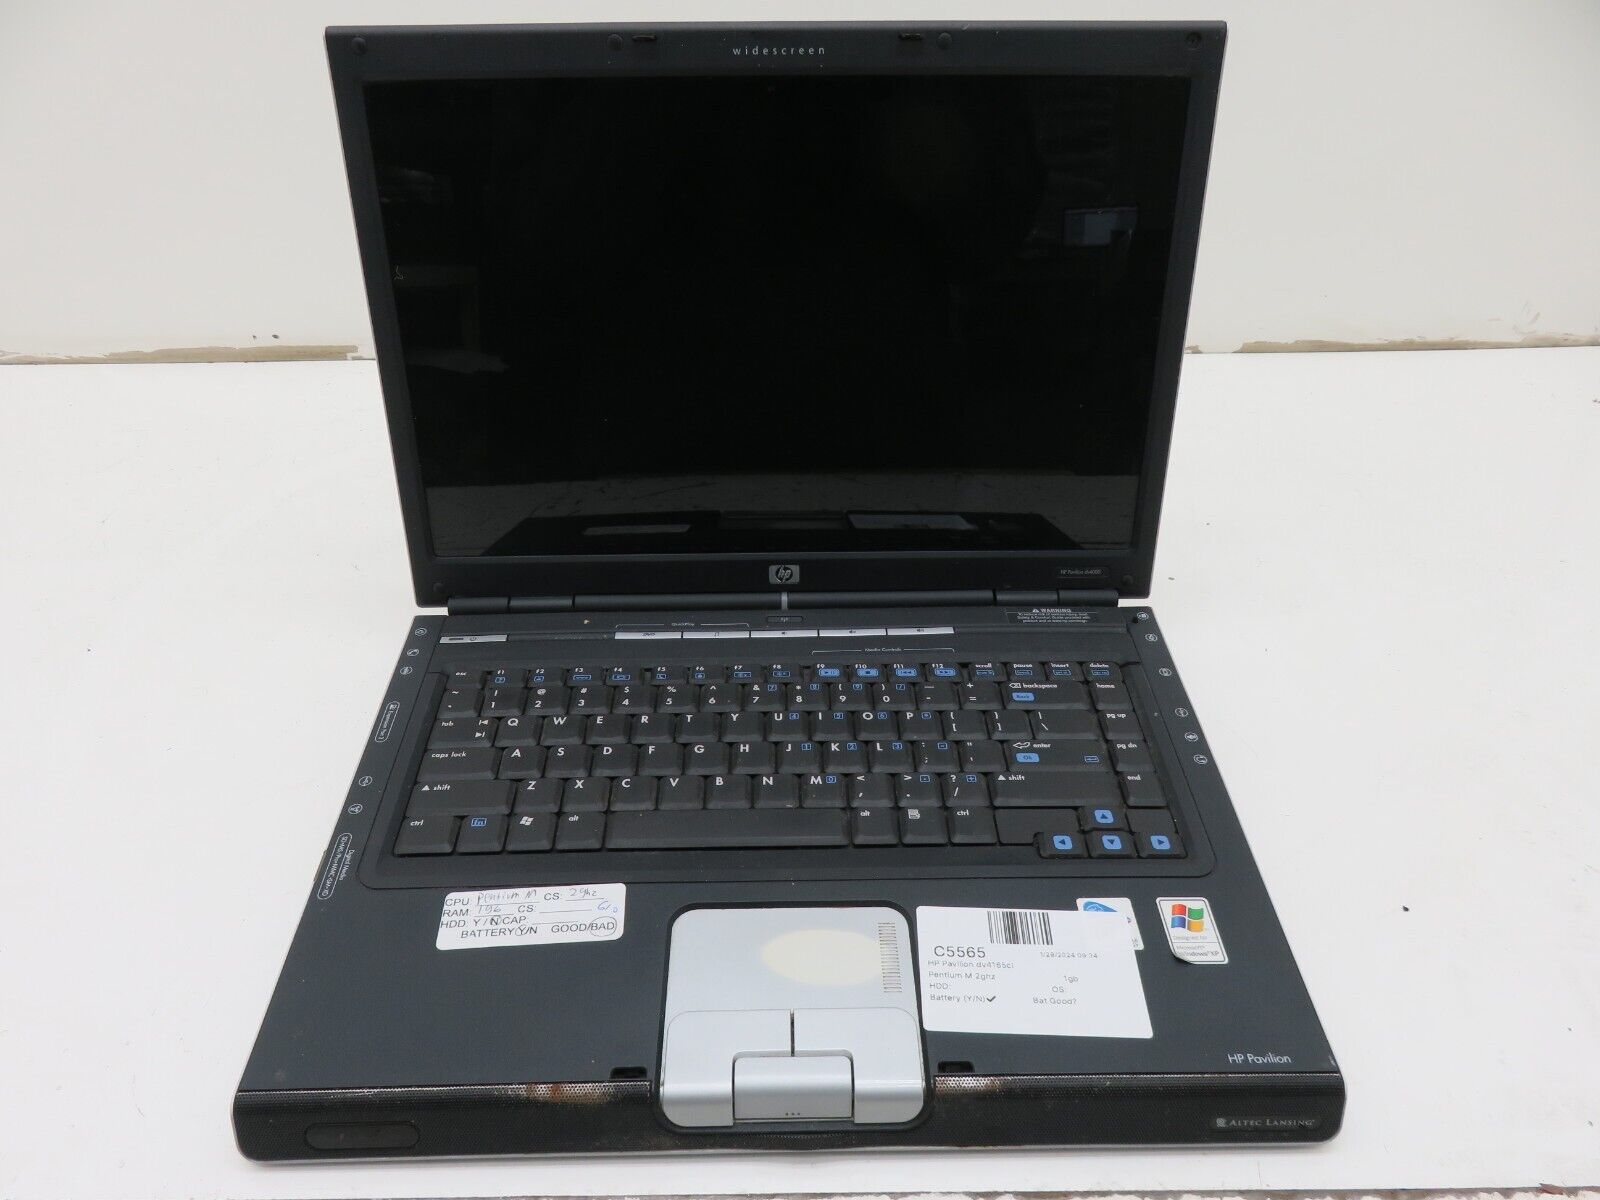 HP Pavilion dv4000 DV4165CL Laptop Intel Pentium M 1GB Ram No HDD,Bad Battery